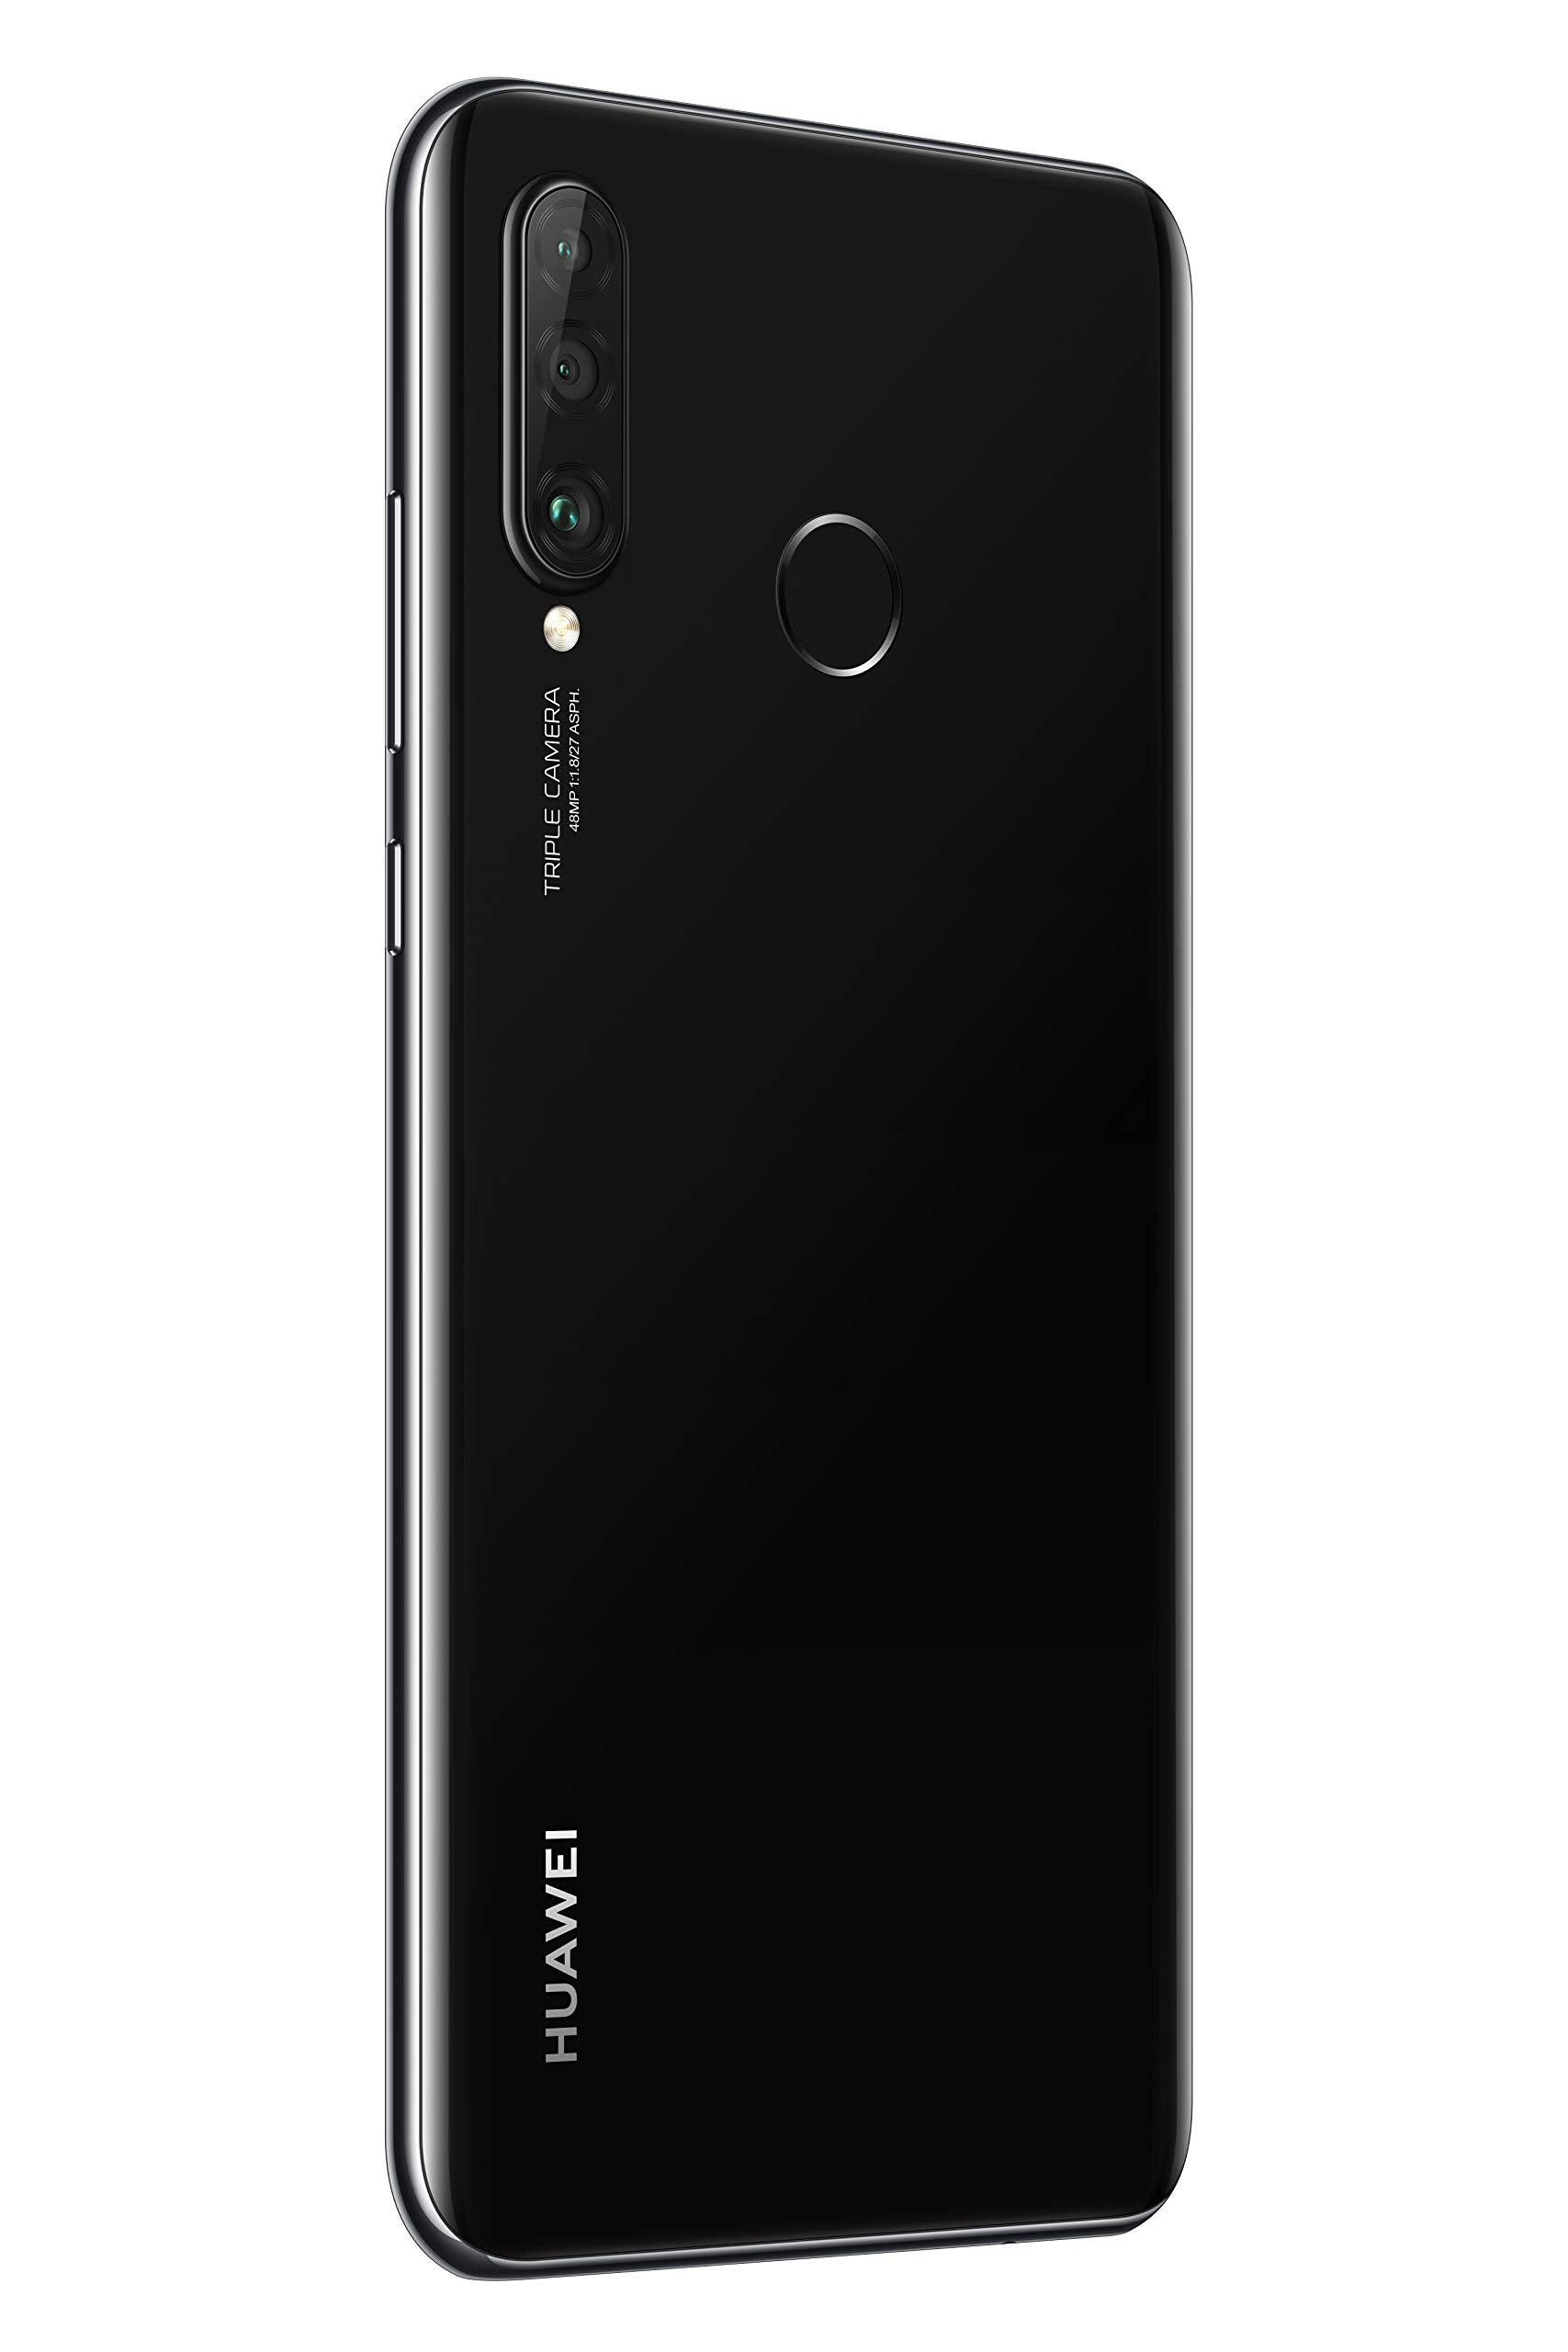 Huawei P30 Lite 128 GB 6.15 inch FHD Dewdrop Display Smartphone with 48MP AI Ultra-wide Triple Camera, 4GB RAM, Android 9.0 Sim-Free Mobile Phone, Single Sim, UK Version, Midnight Black